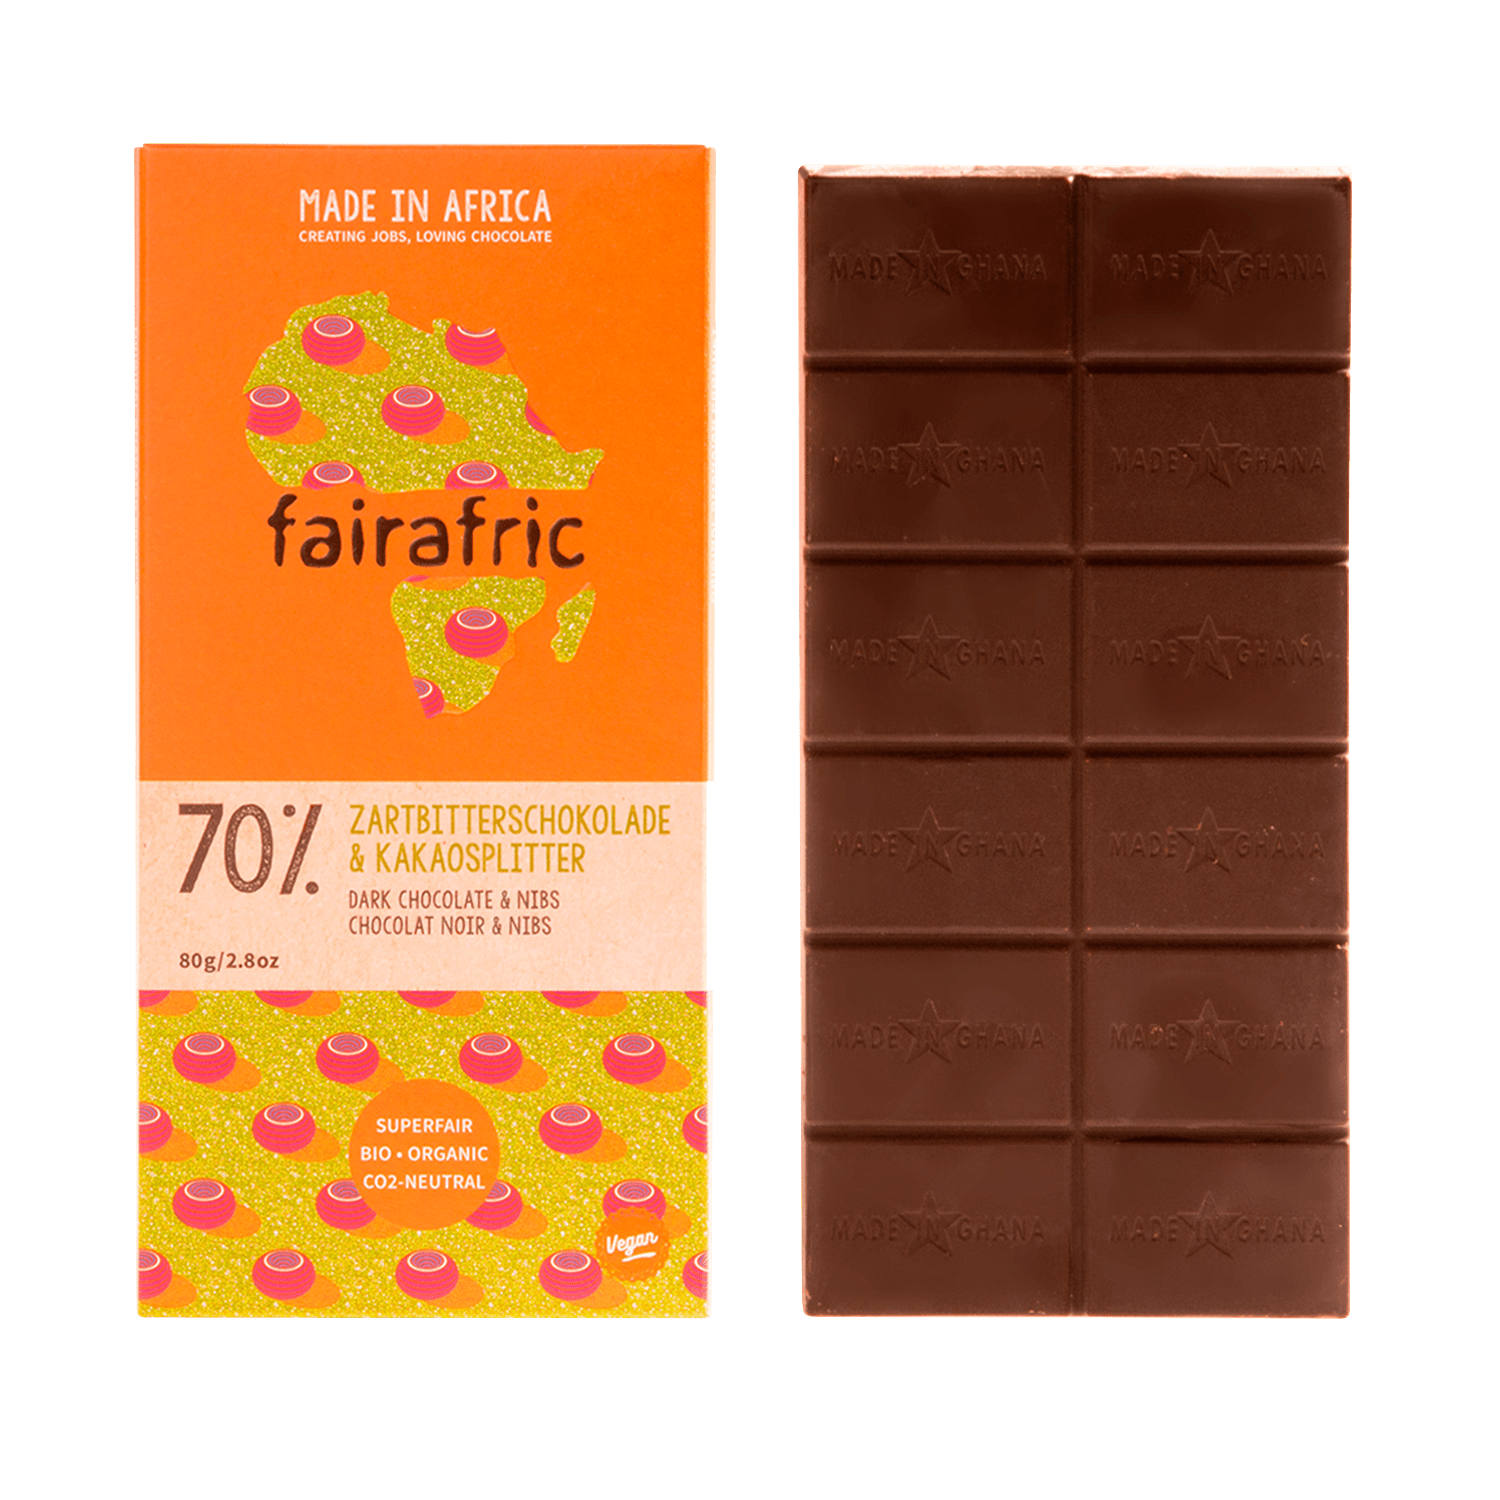 Zartbitterschokolade & Kakaosplitter 70%, BIO, 80g